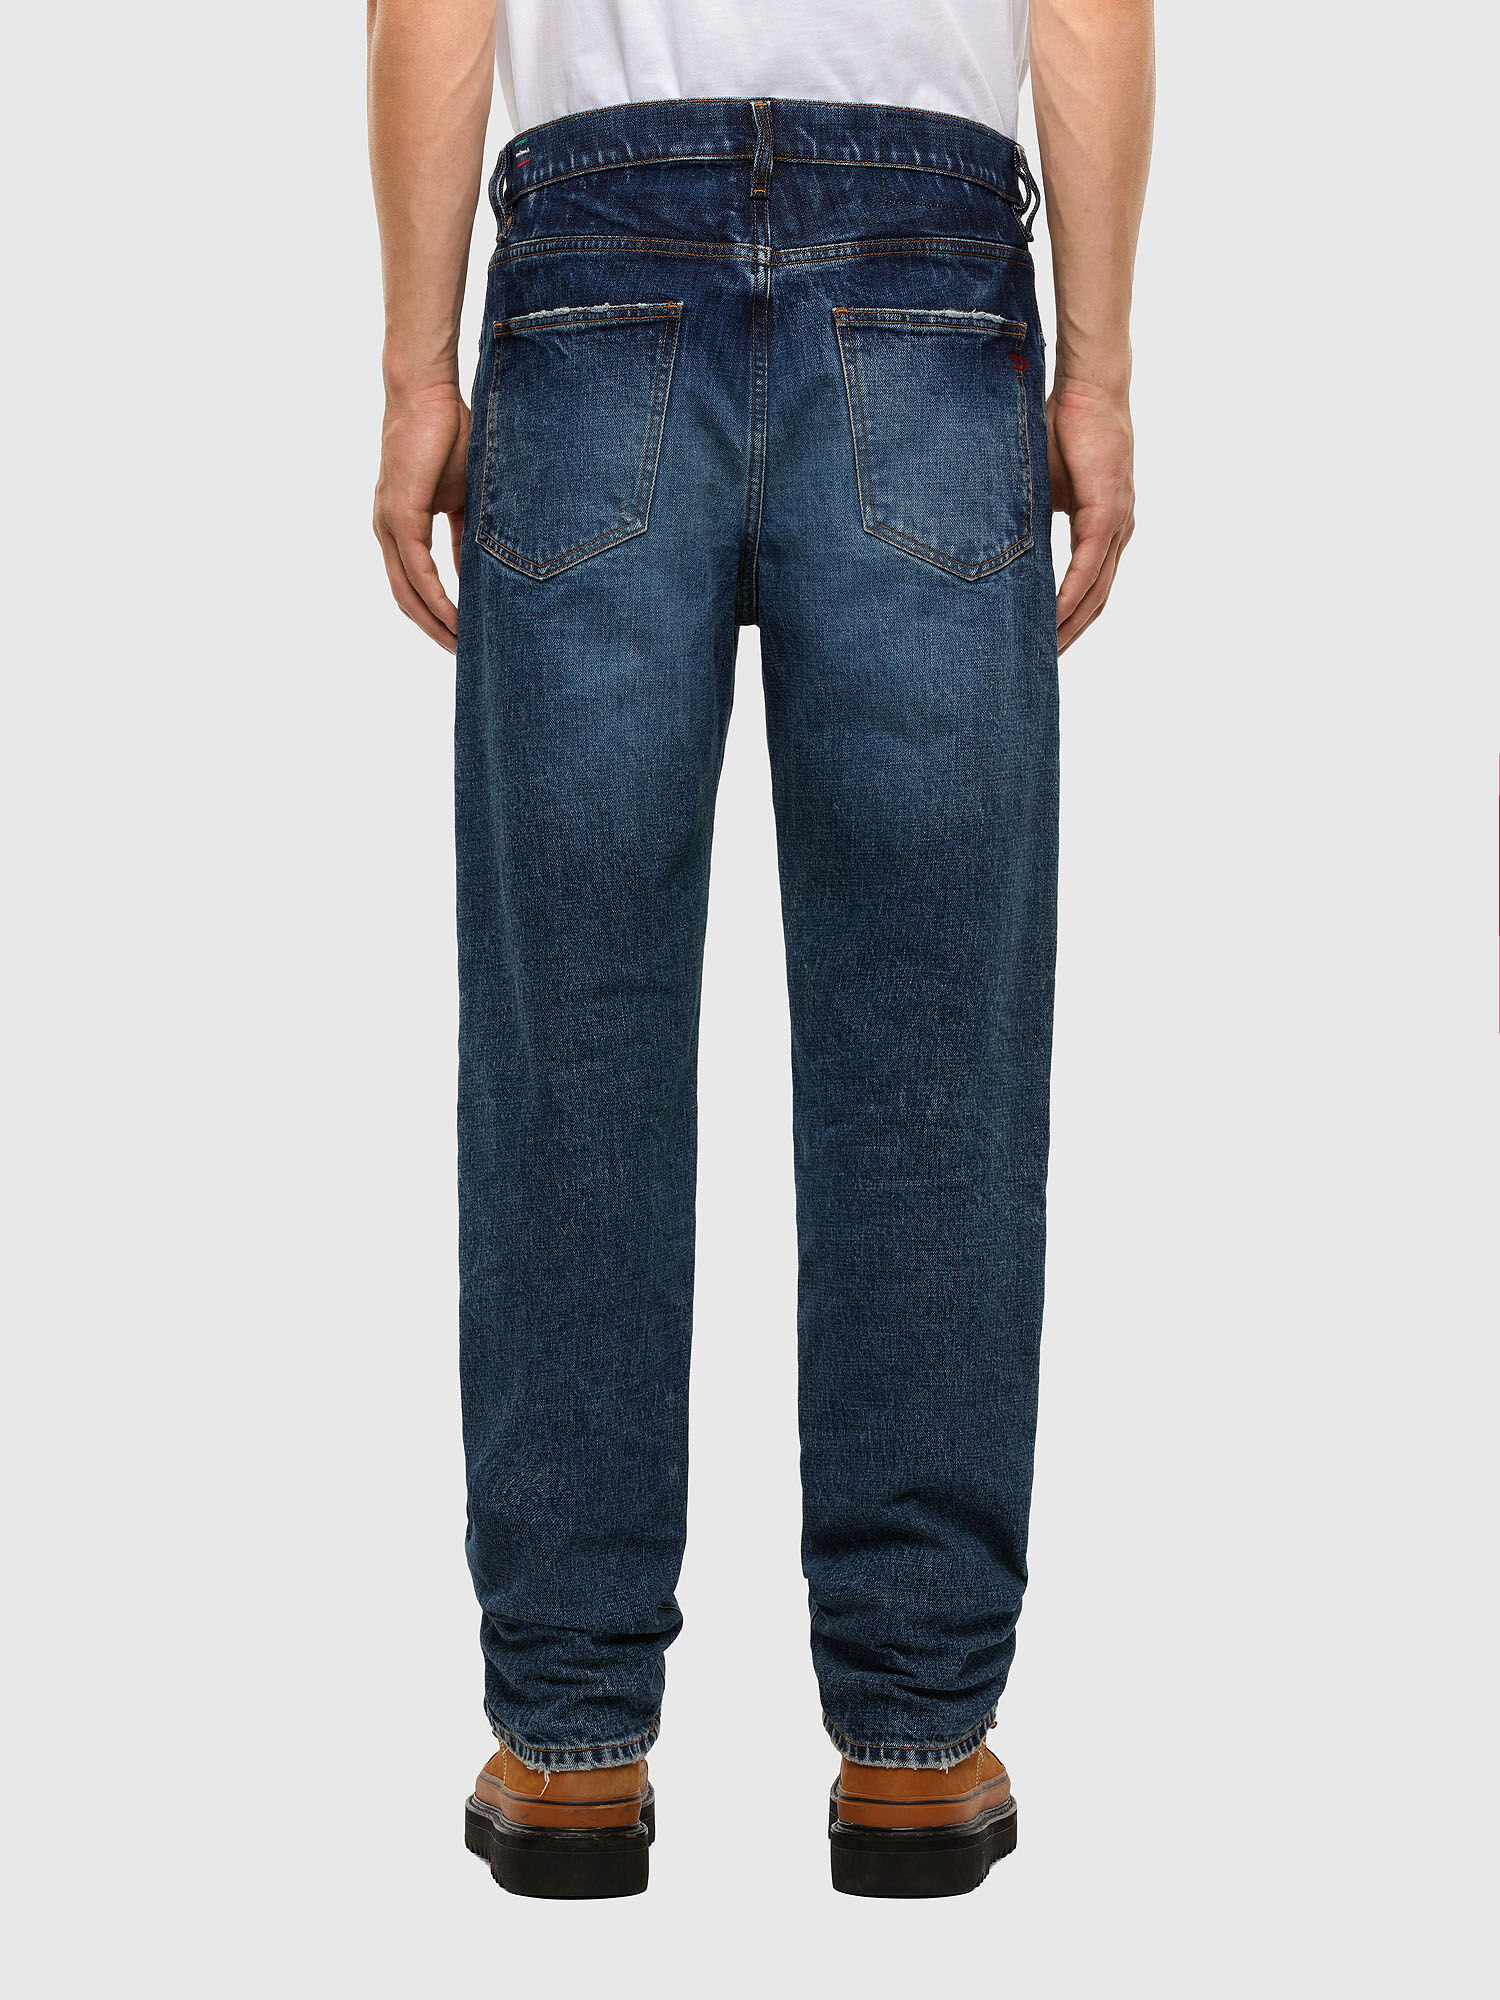 D-Macs Straight Jeans 0079P: Dark blue, Stretch| Diesel